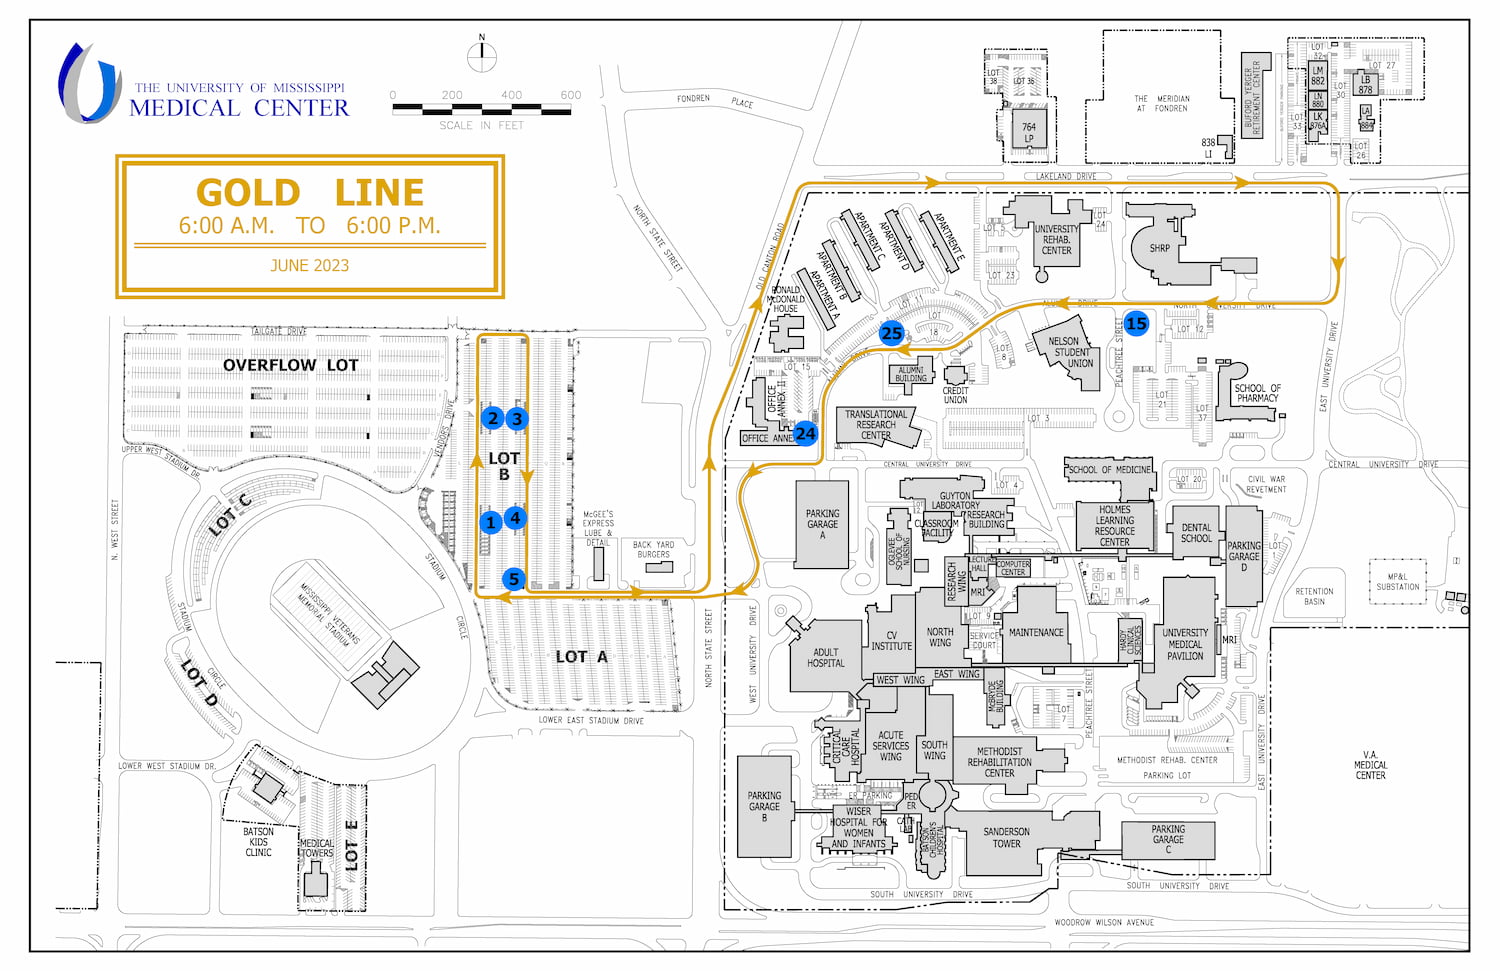 Shuttle Gold Line Map - click below for full image long description.